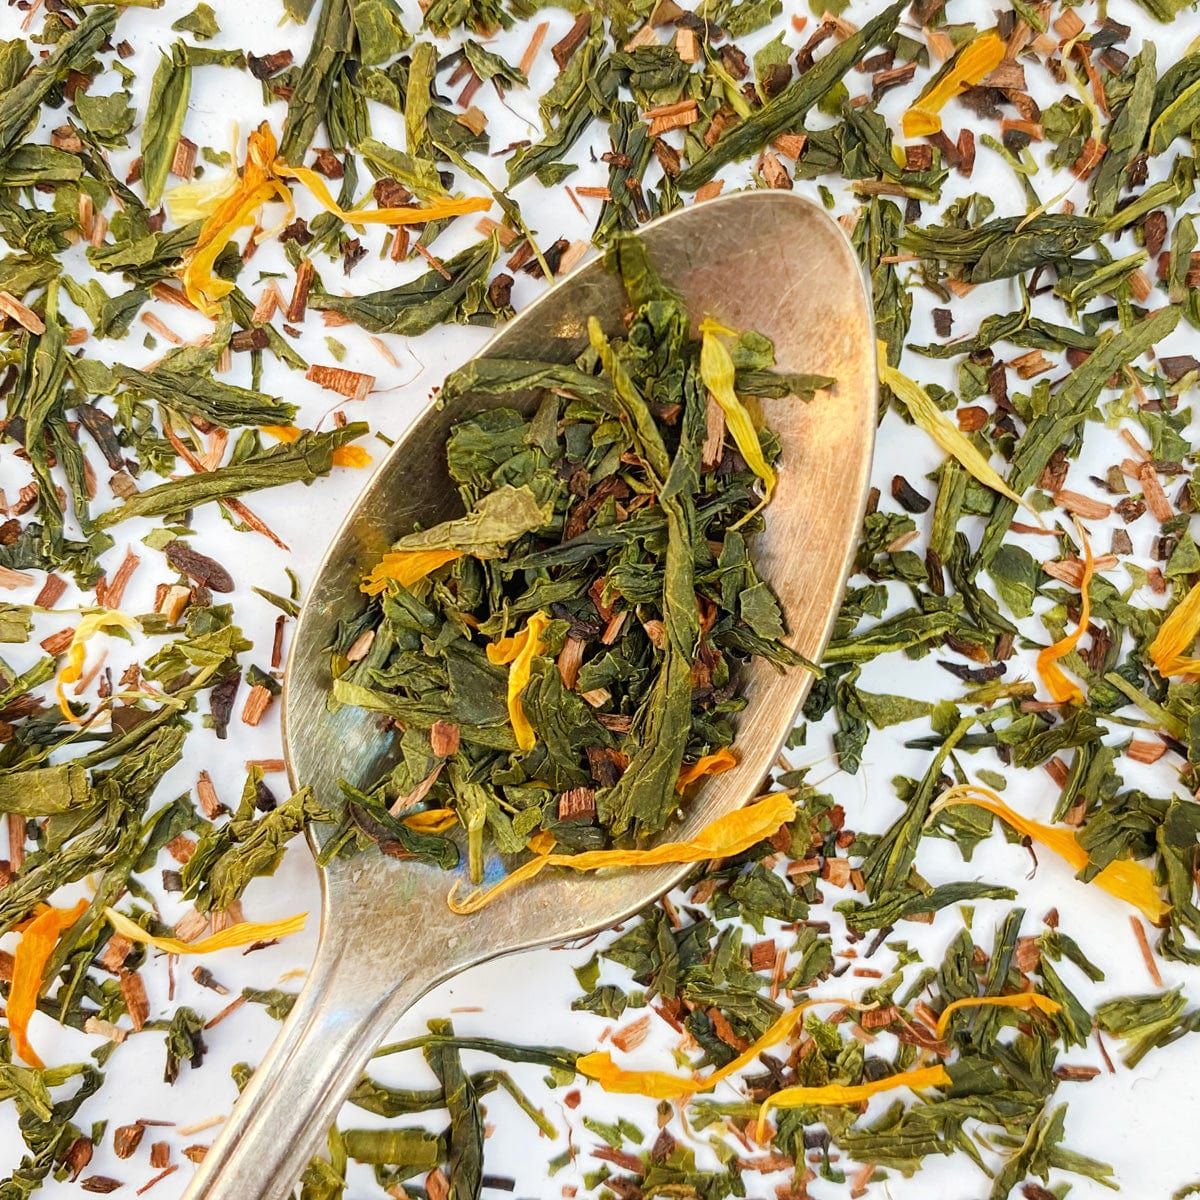 Plum Deluxe Tea Mango-Apricot Green Tea by Plum Deluxe Tea